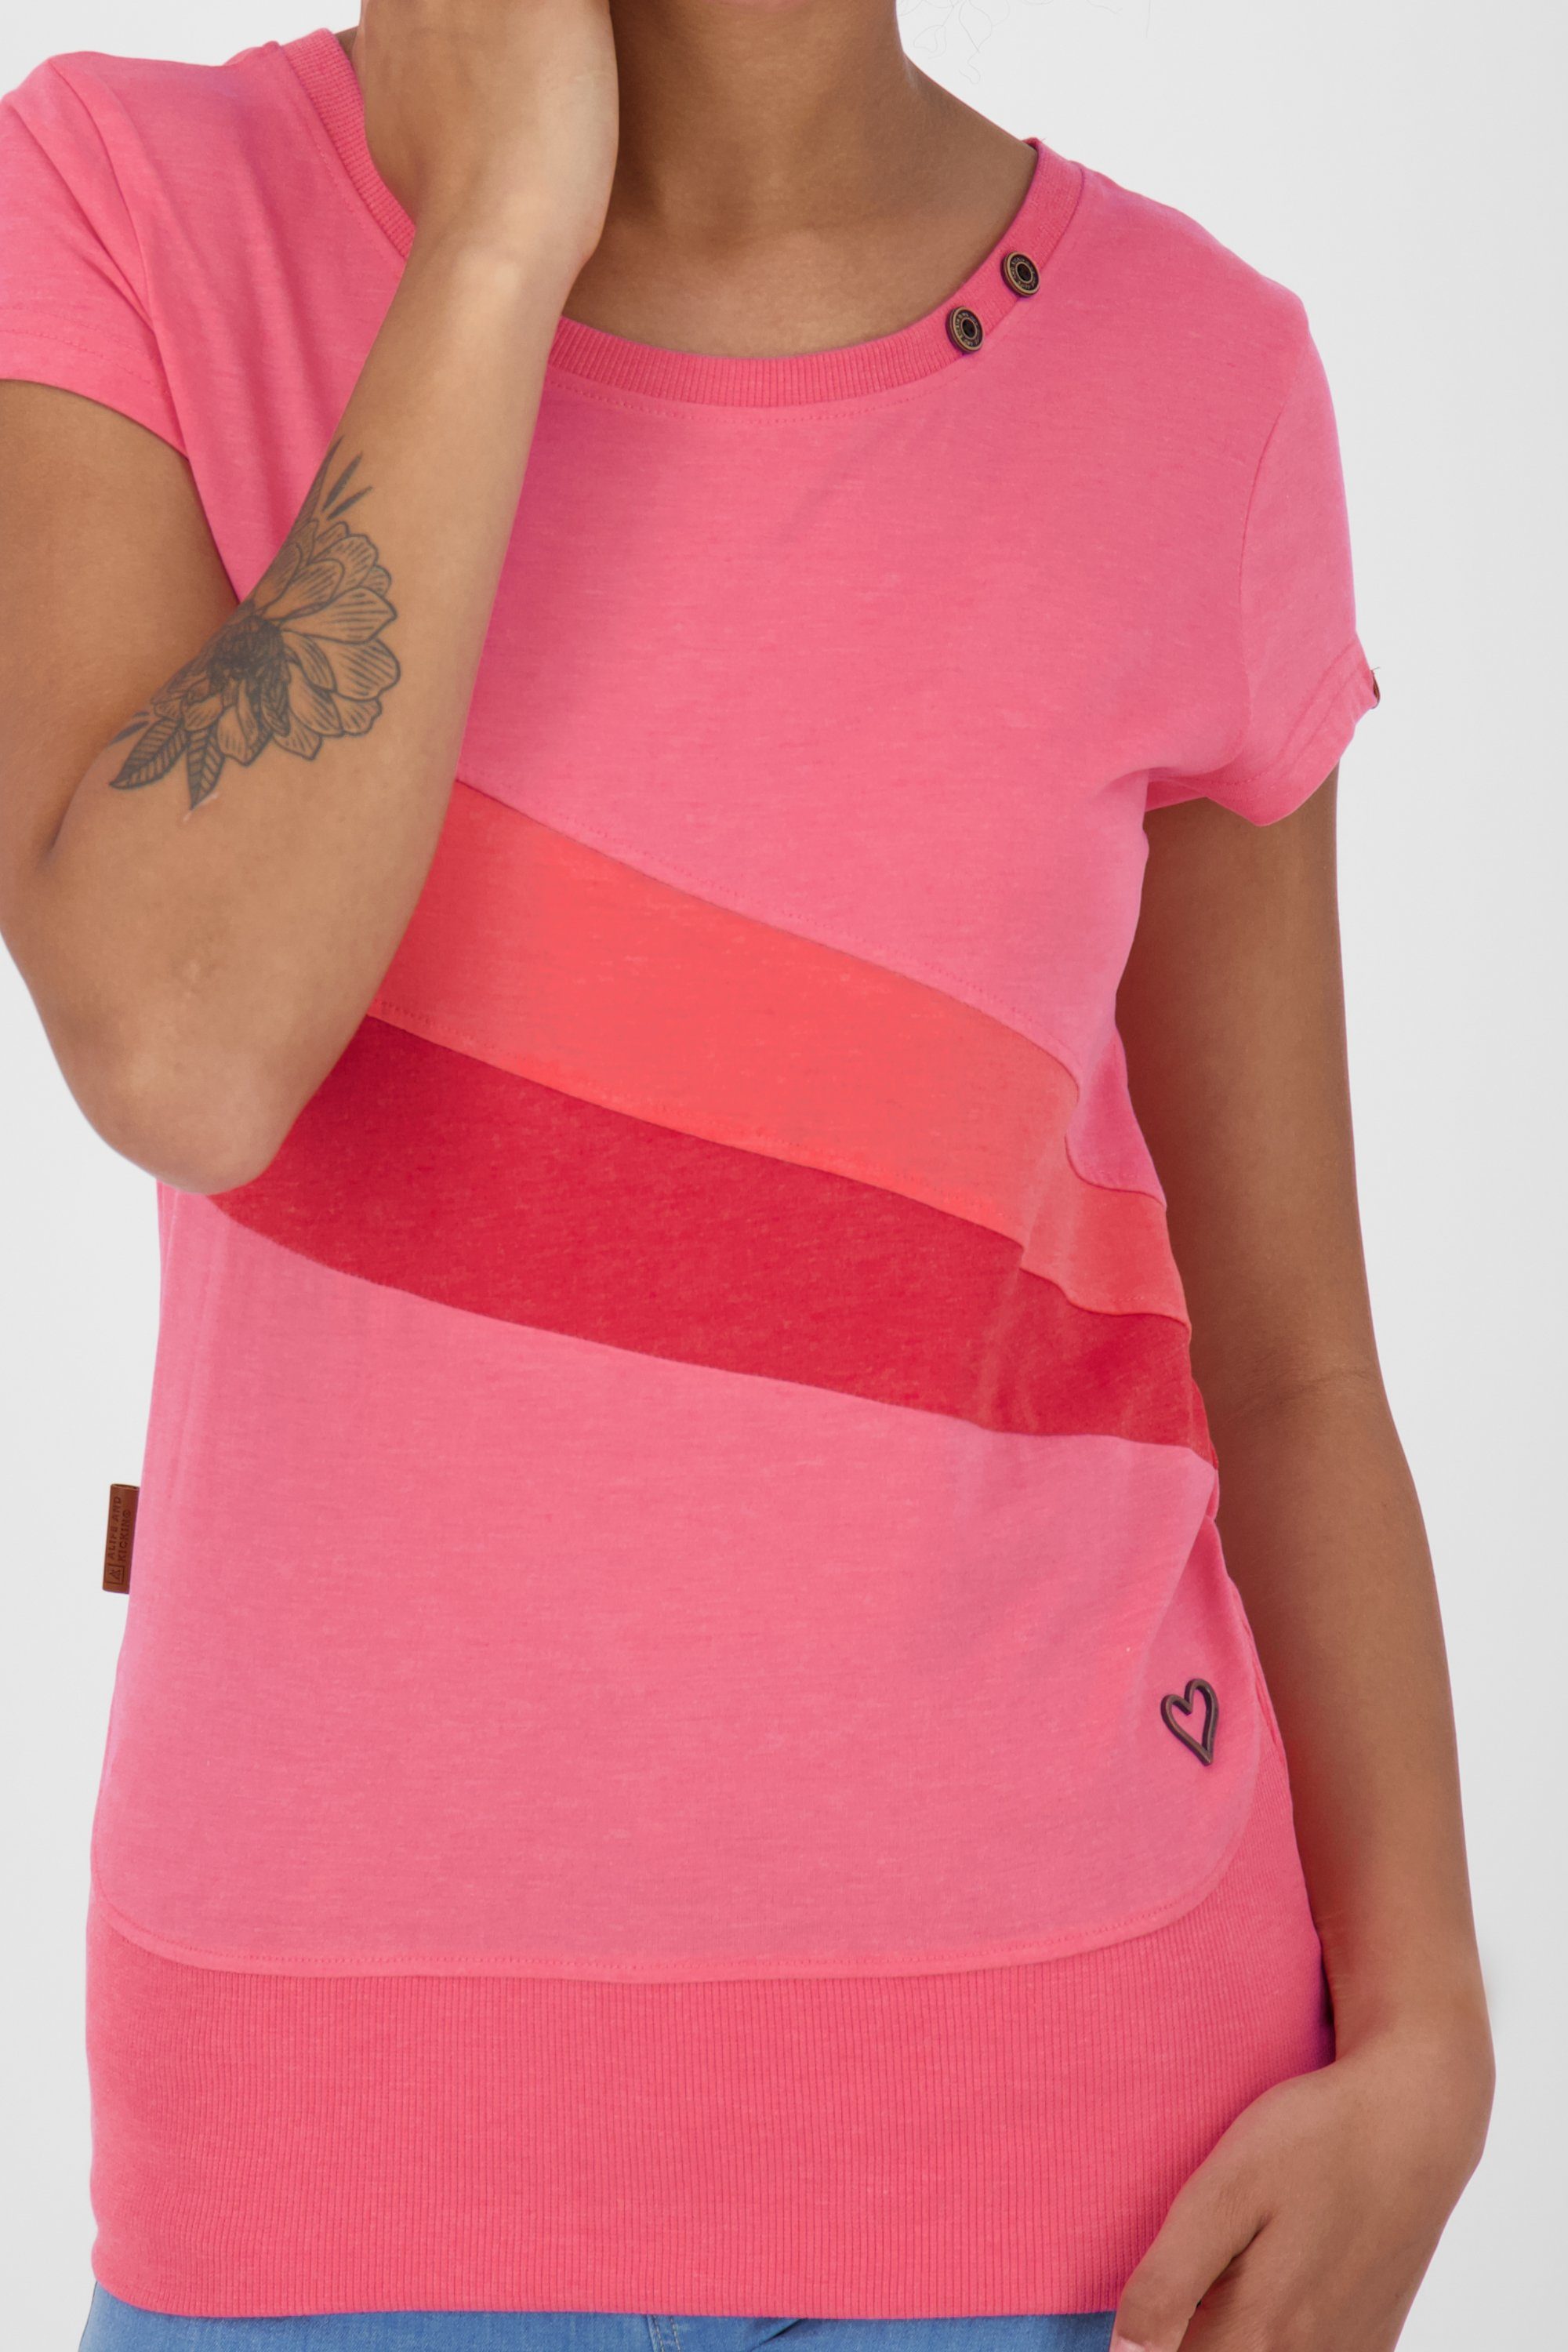 Alife & Kickin T-Shirt CleaAK Damen flamingo T-Shirt Shirt